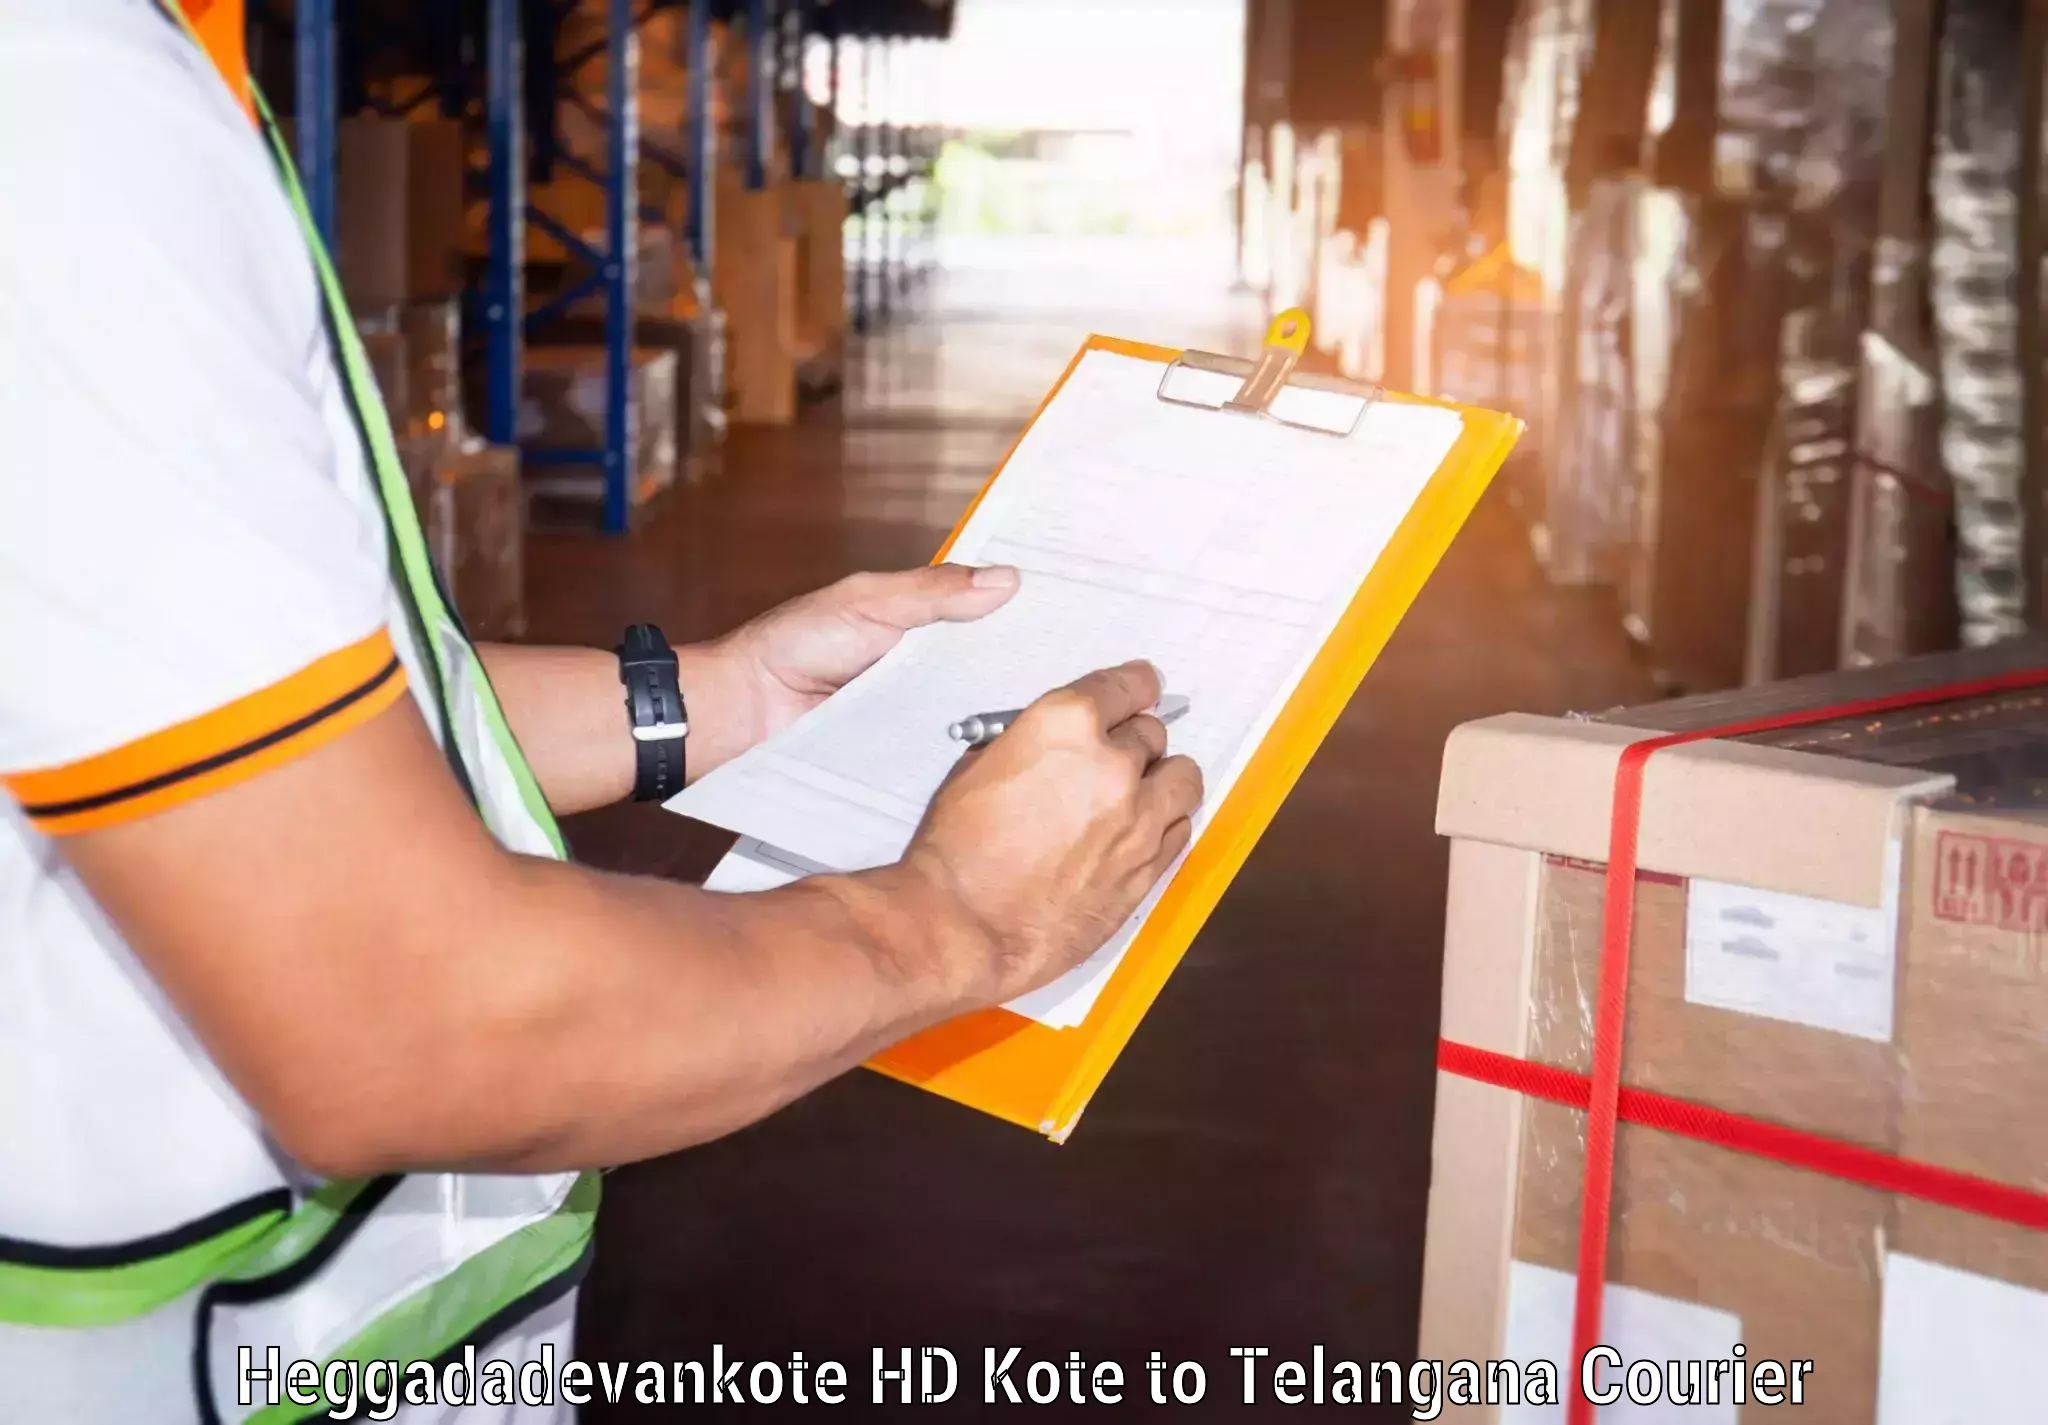 24/7 shipping services Heggadadevankote HD Kote to Netrang